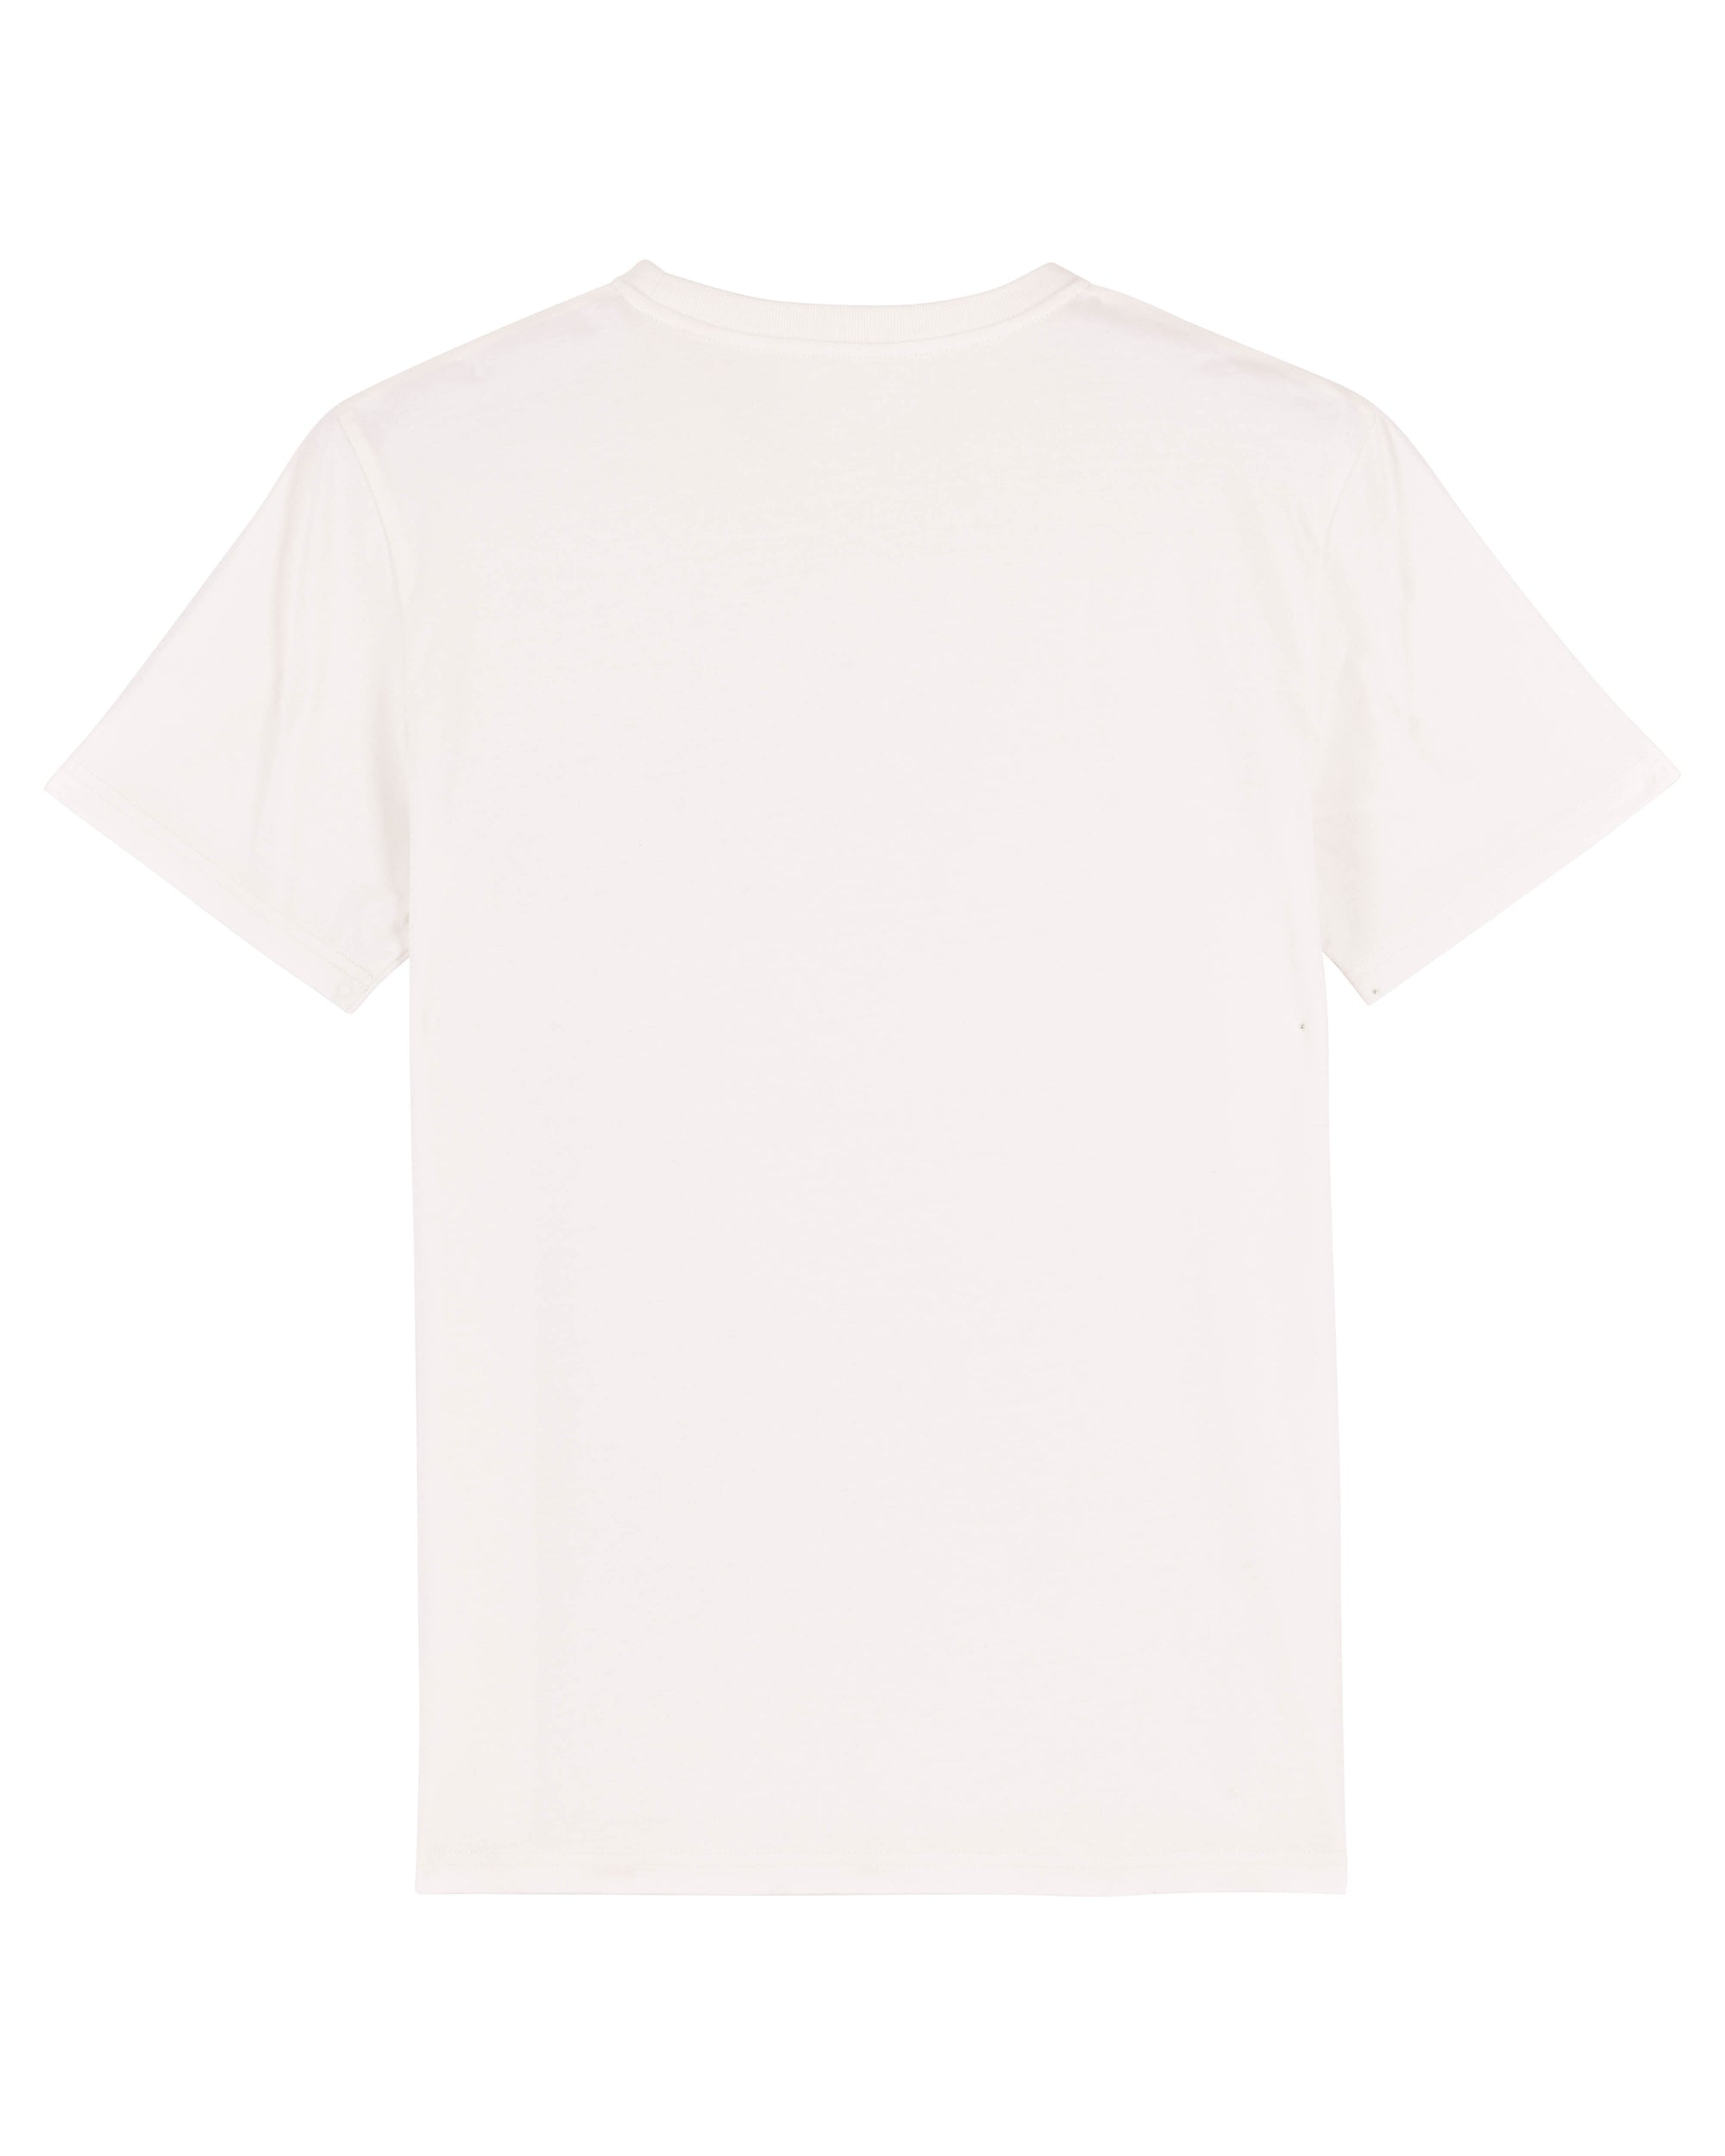 T-Shirt "Moin" Off White/Blue